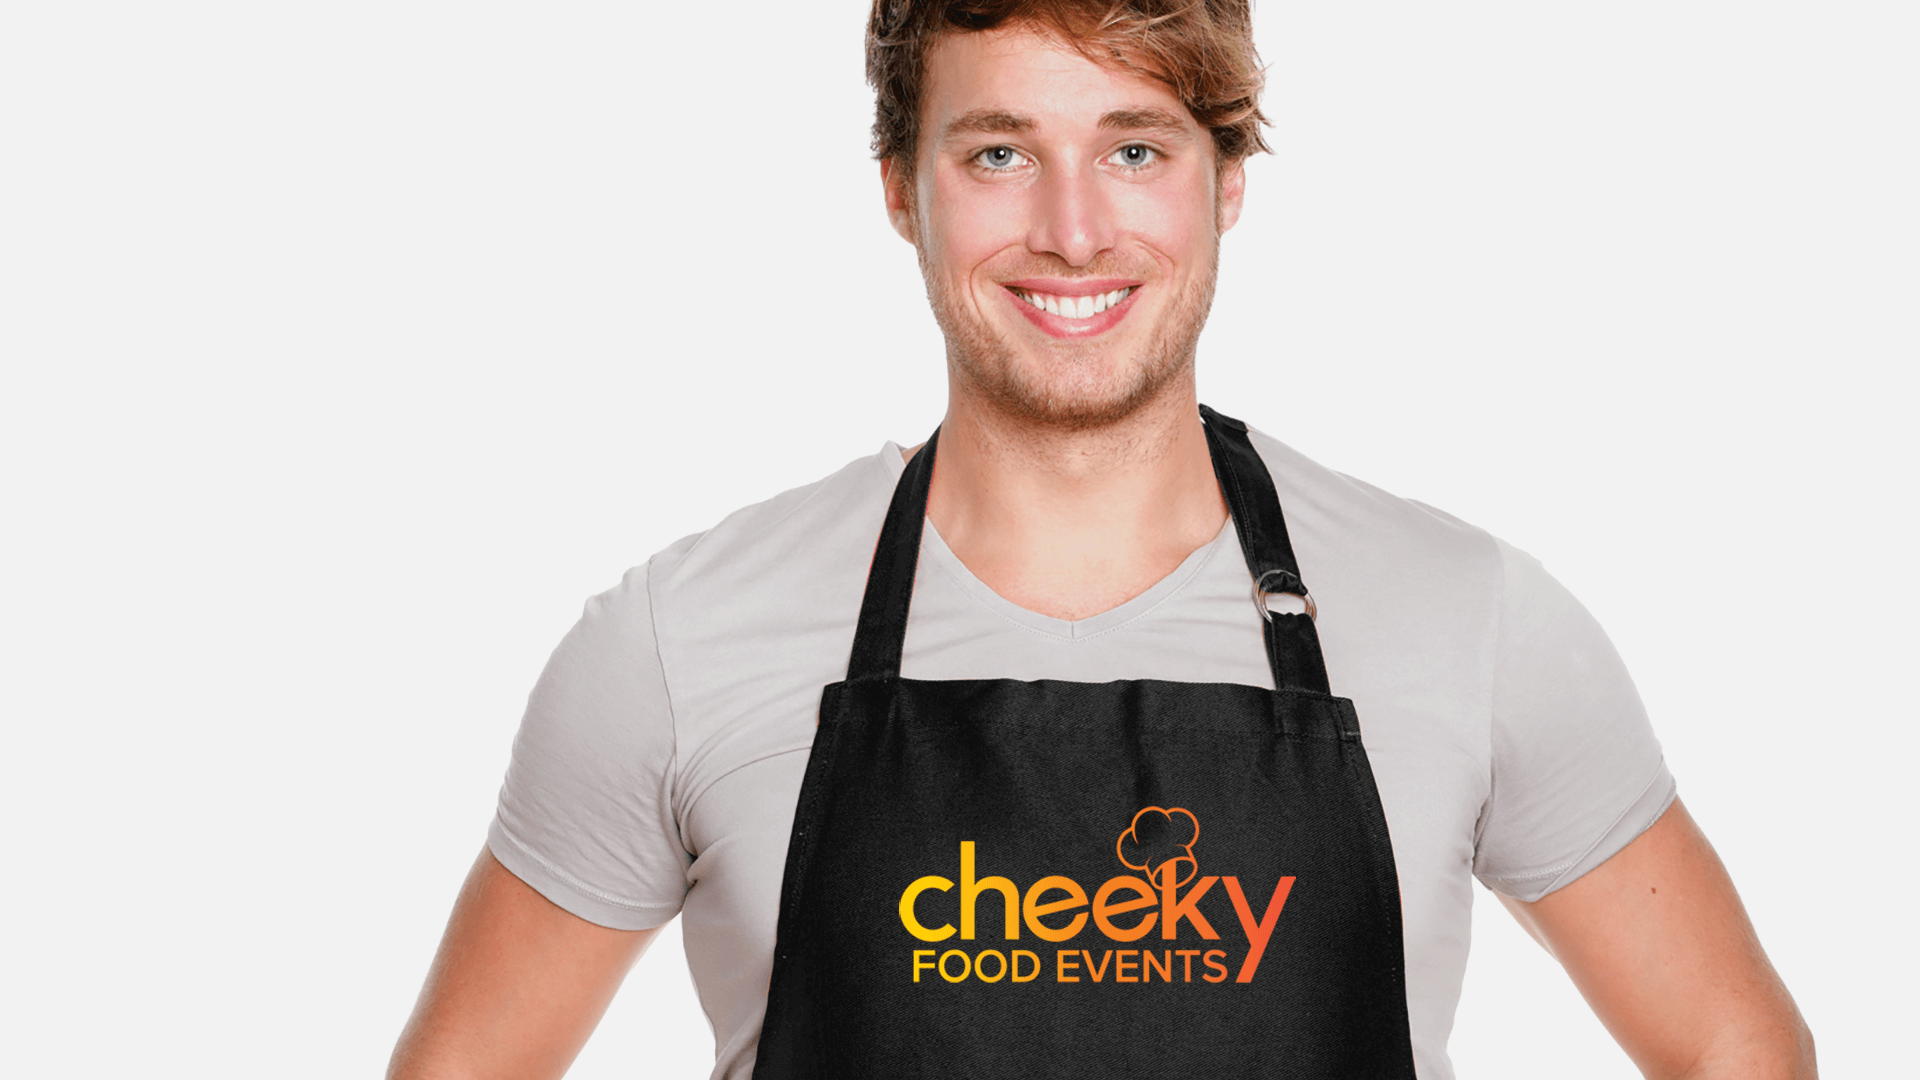 Cheeky Food Events - Zadro Agency